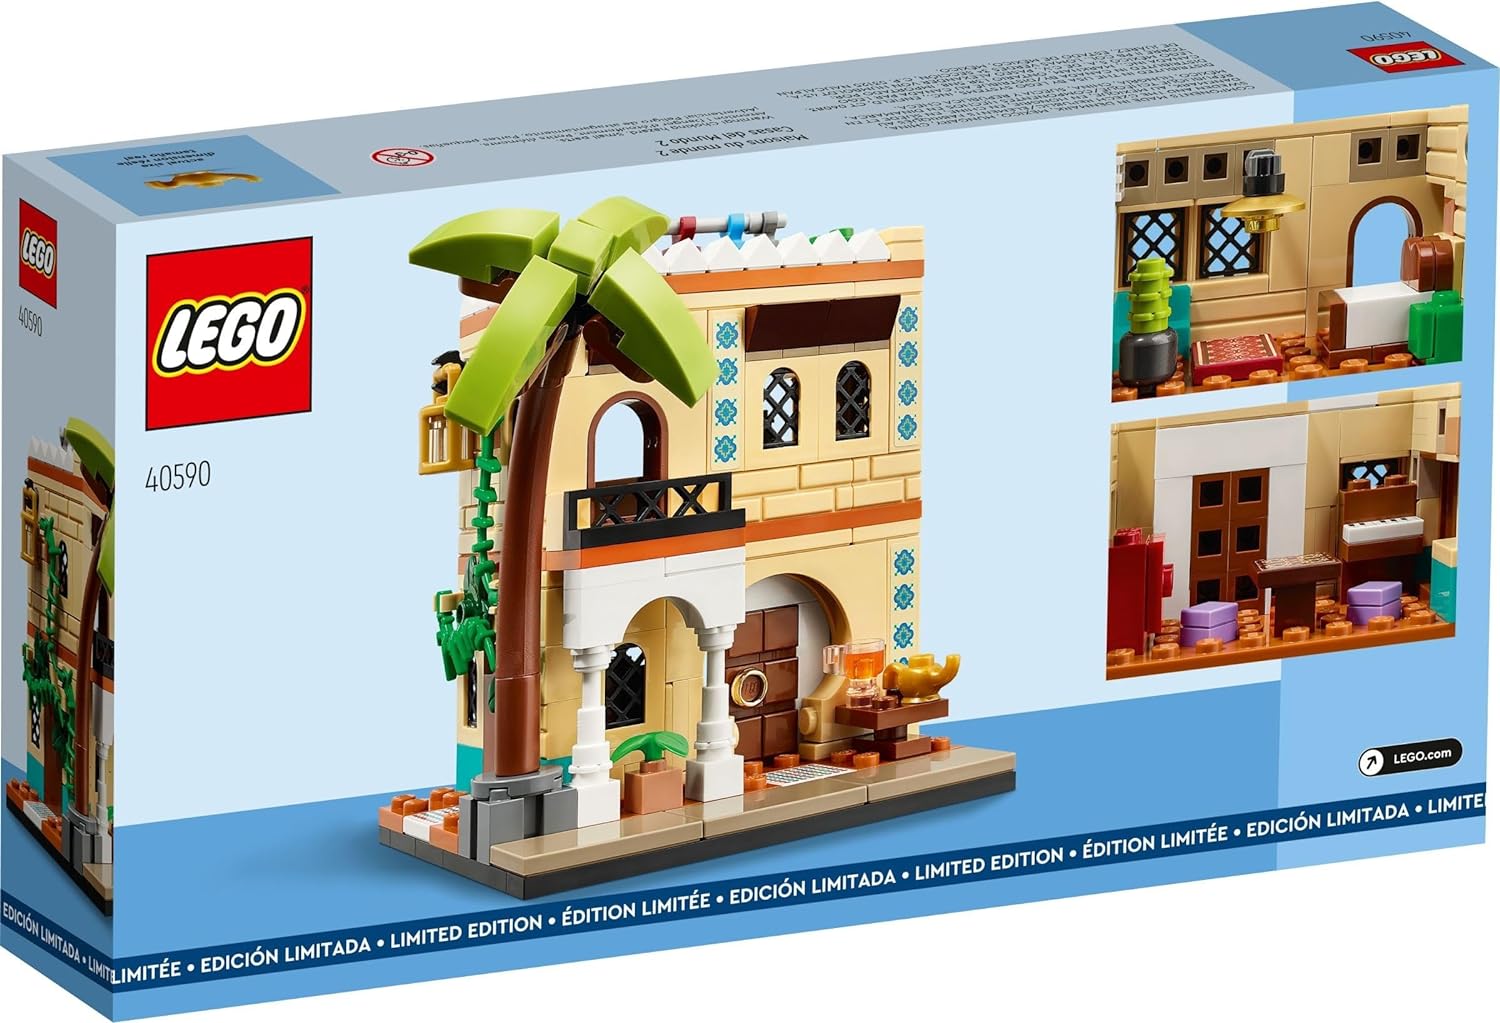 LEGO City Houses of the World 2 Set (40590) [RETIRED]